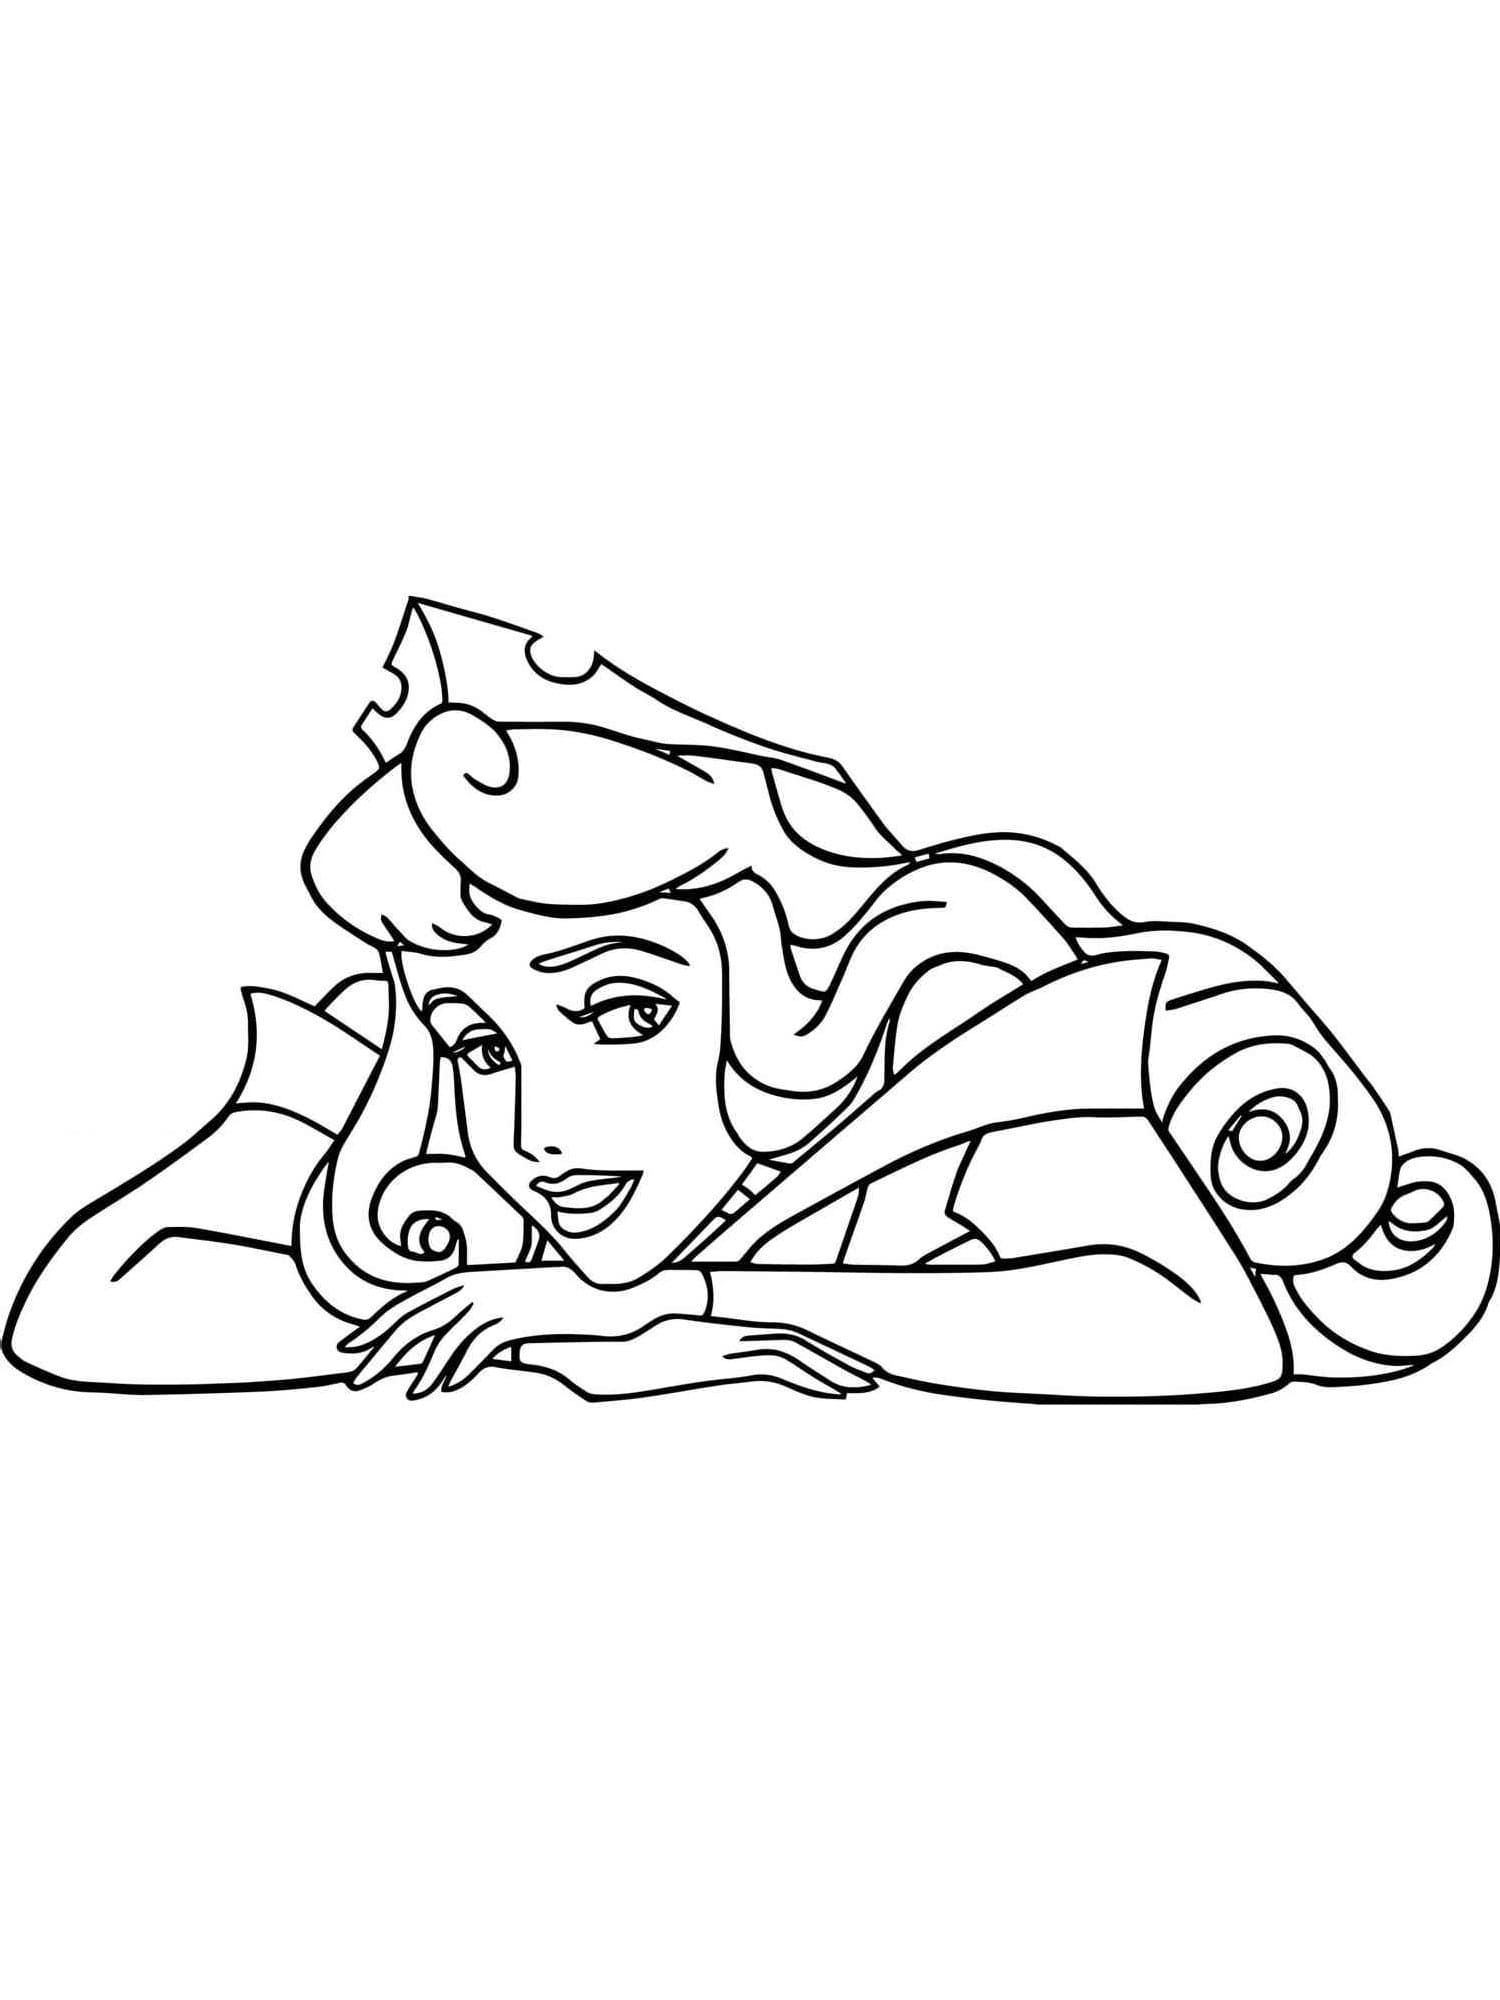 Printable Princess Aurora coloring page - Download, Print or Color ...